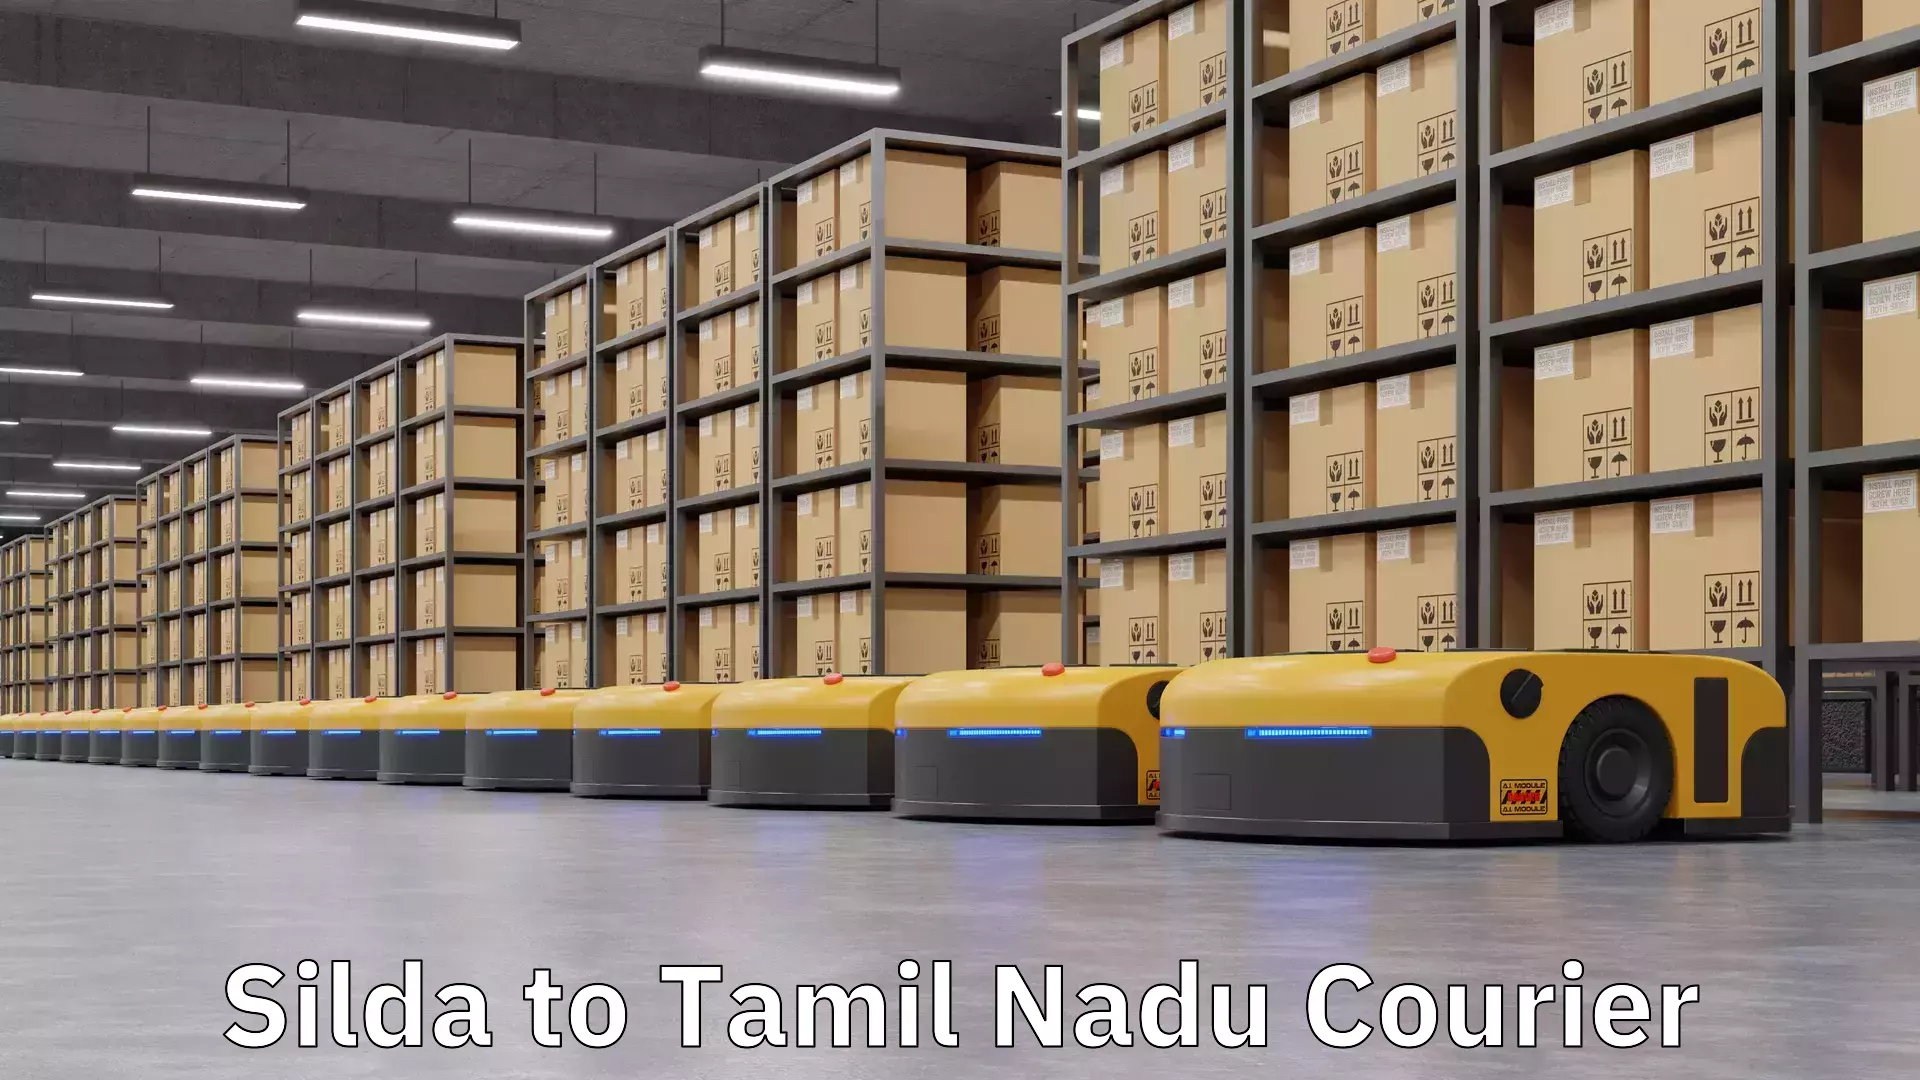 Cash on delivery service Silda to Tamil Nadu